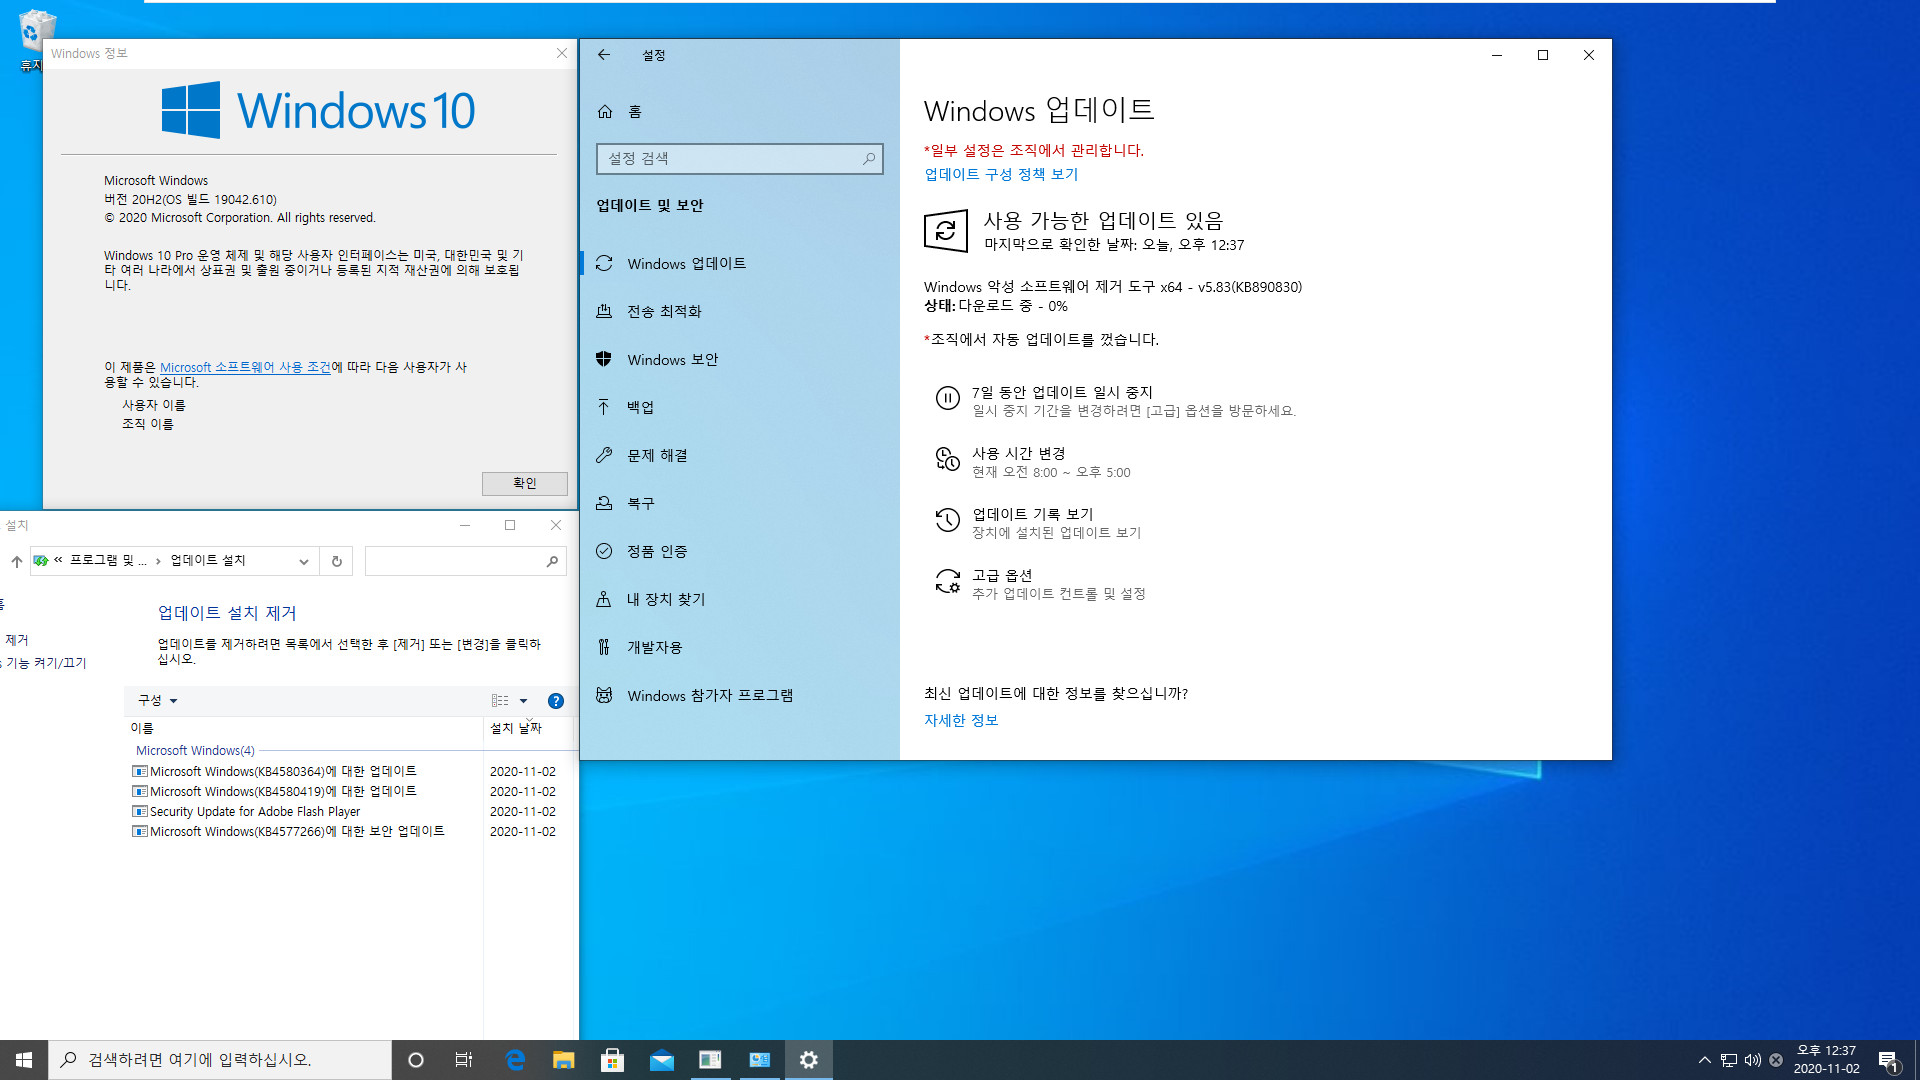 Windows 10 버전 20H2 기능 업데이트 KB4562830 폴더의 mum 파일들만 찾아서 설치하기.bat - 크로미엄 엣지 설치하지 않고 버전 20H2만 설치하기 테스트 -  msu 파일 설치하면 되네요 2020-11-02_123749.jpg